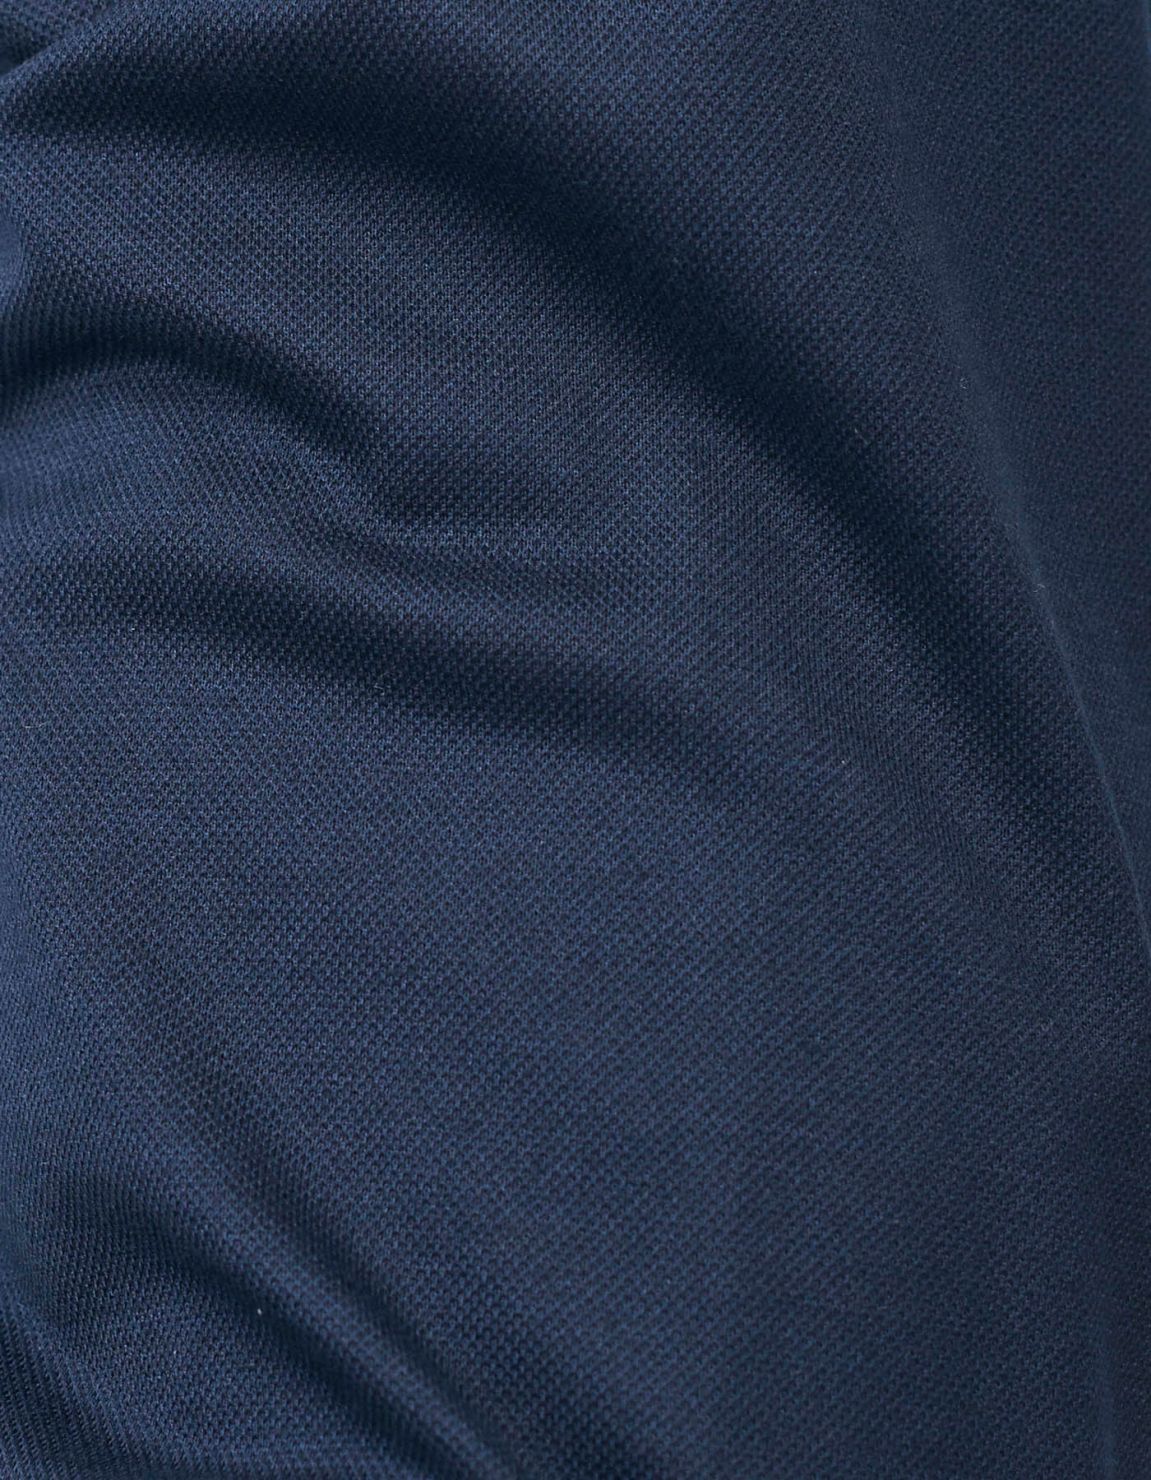 Camicia Collo francese Tinta Unita Piquet Blu navy Tailor Custom Fit 2